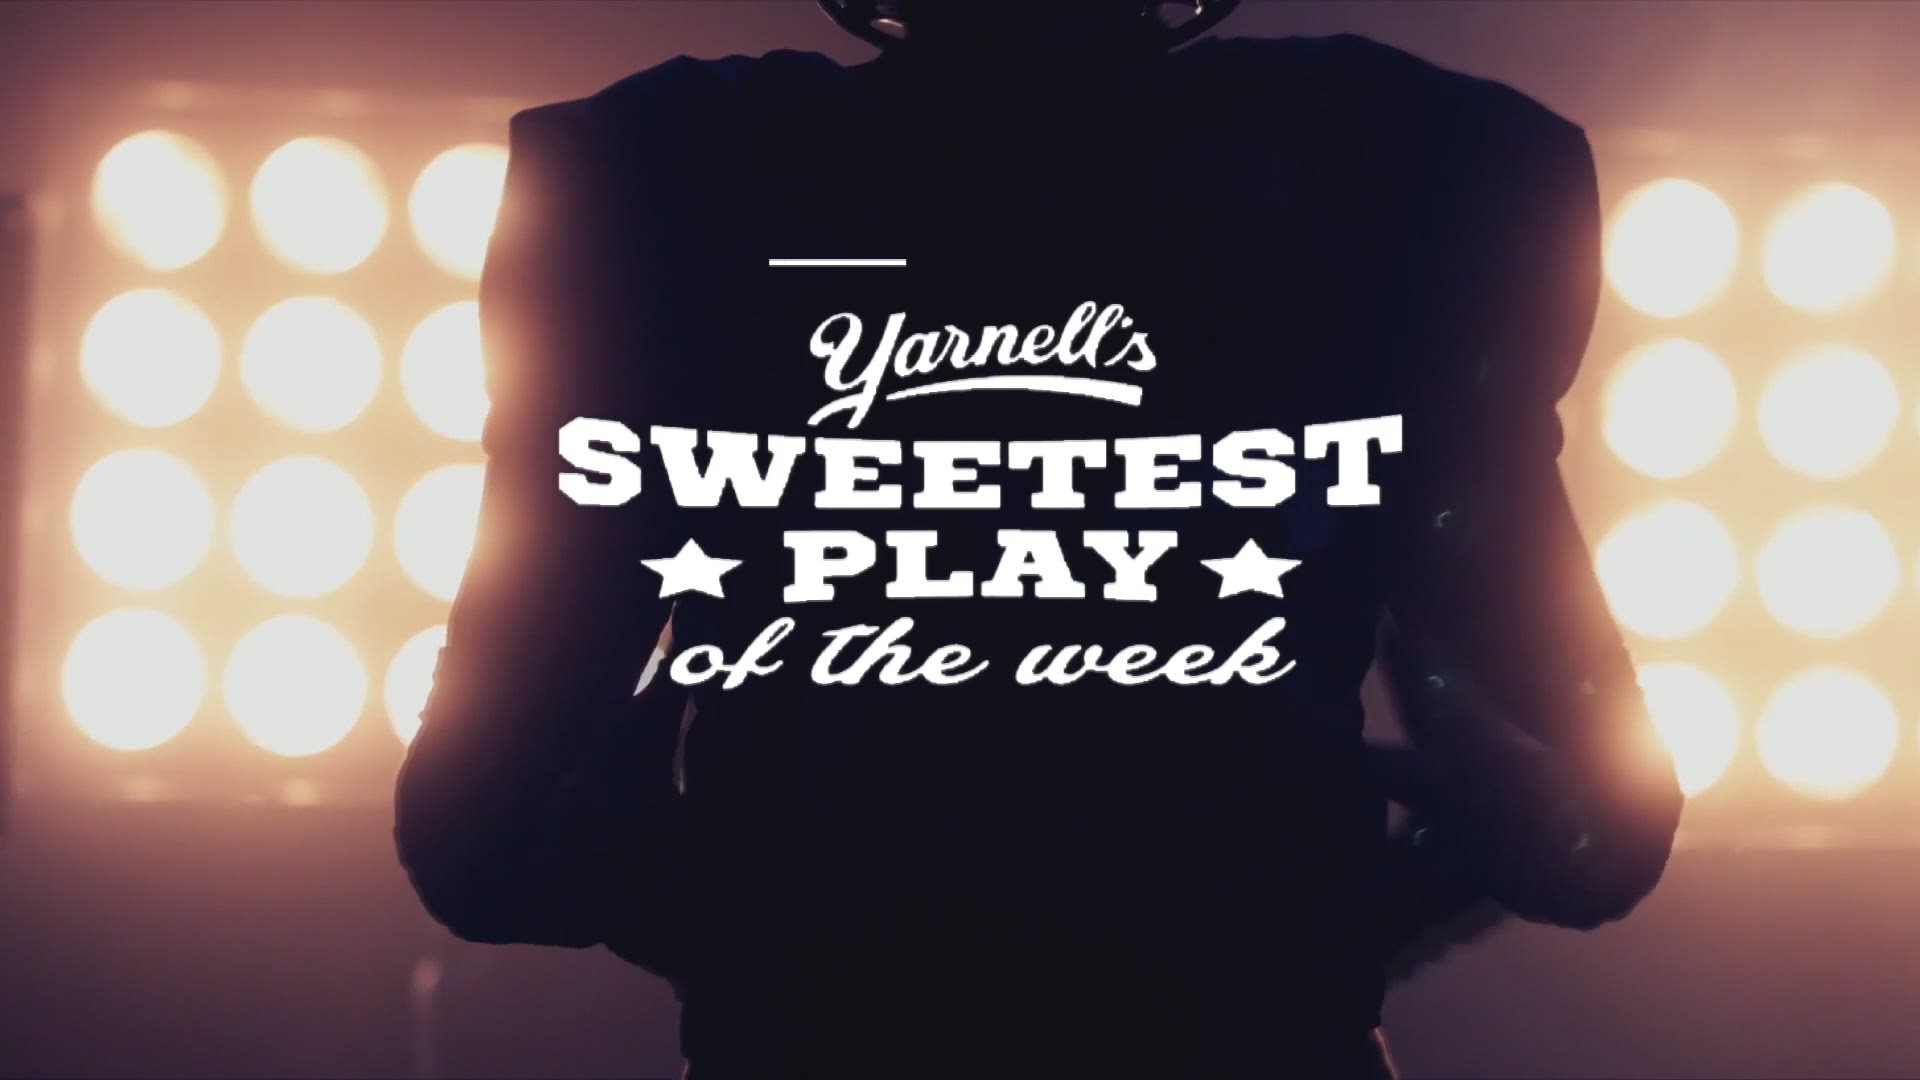 Yarnell's Sweetest Plays of Week 8 nominees